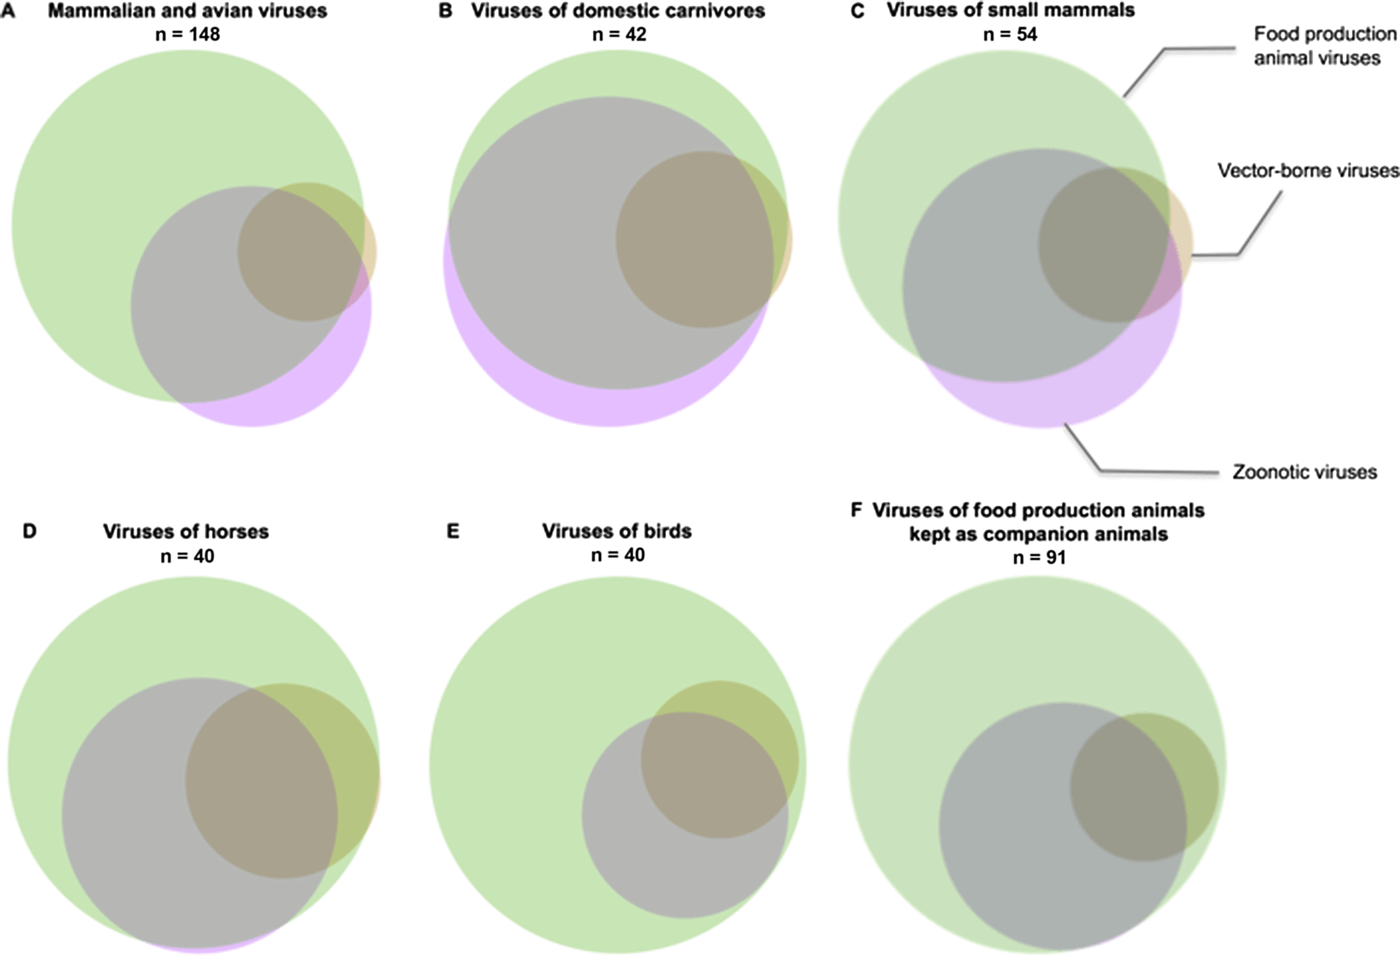 Distribution of vector-borne viruses in companion animal species.